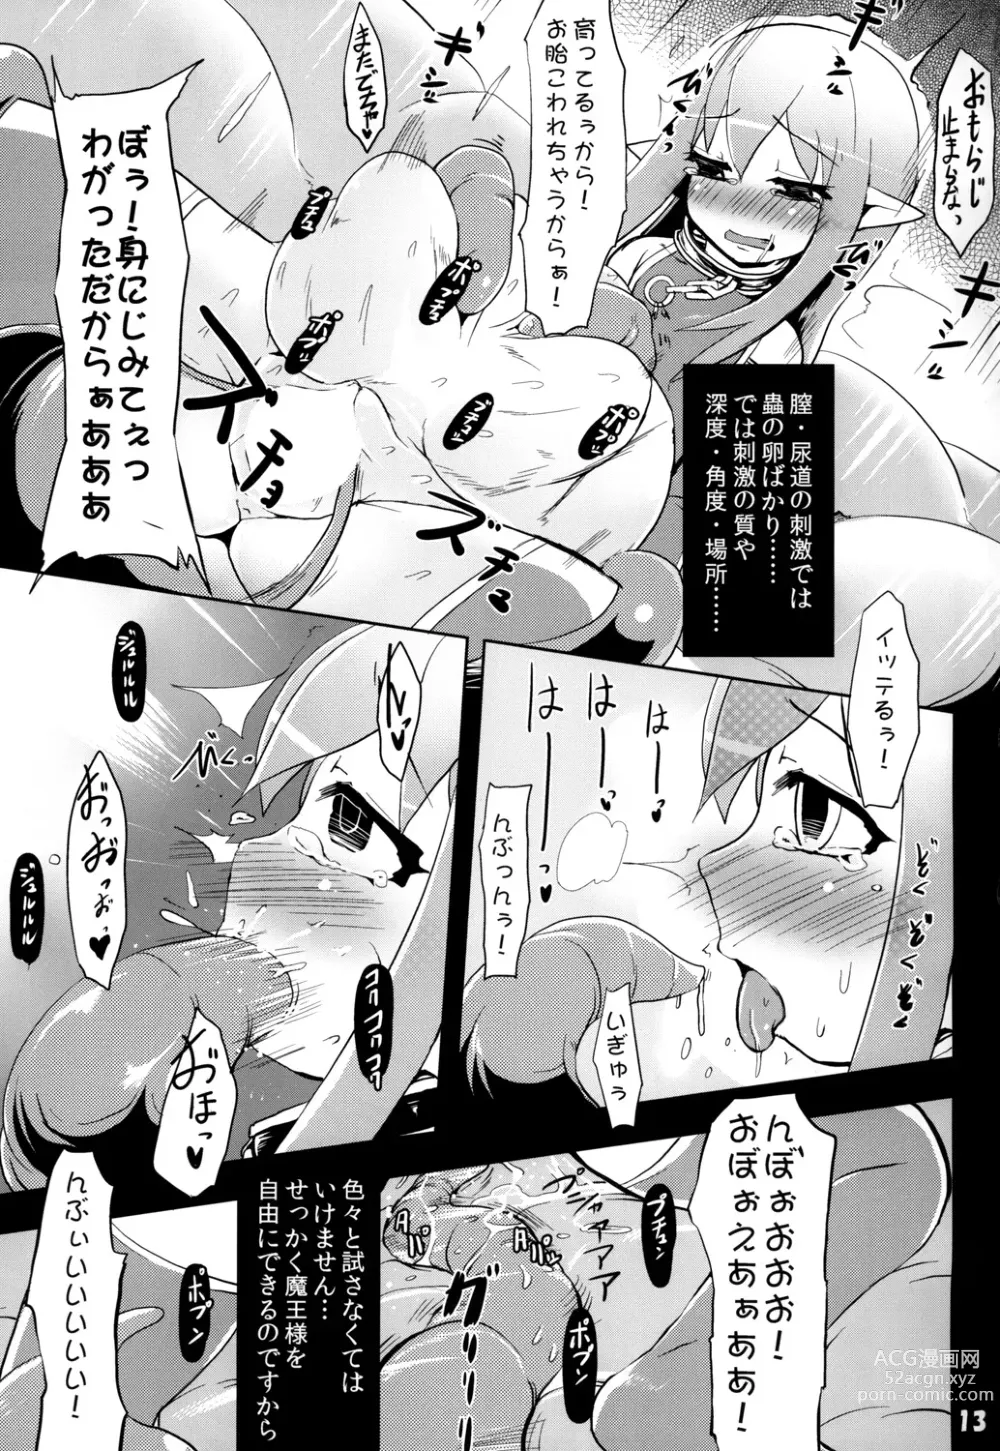 Page 14 of doujinshi Syoku 8